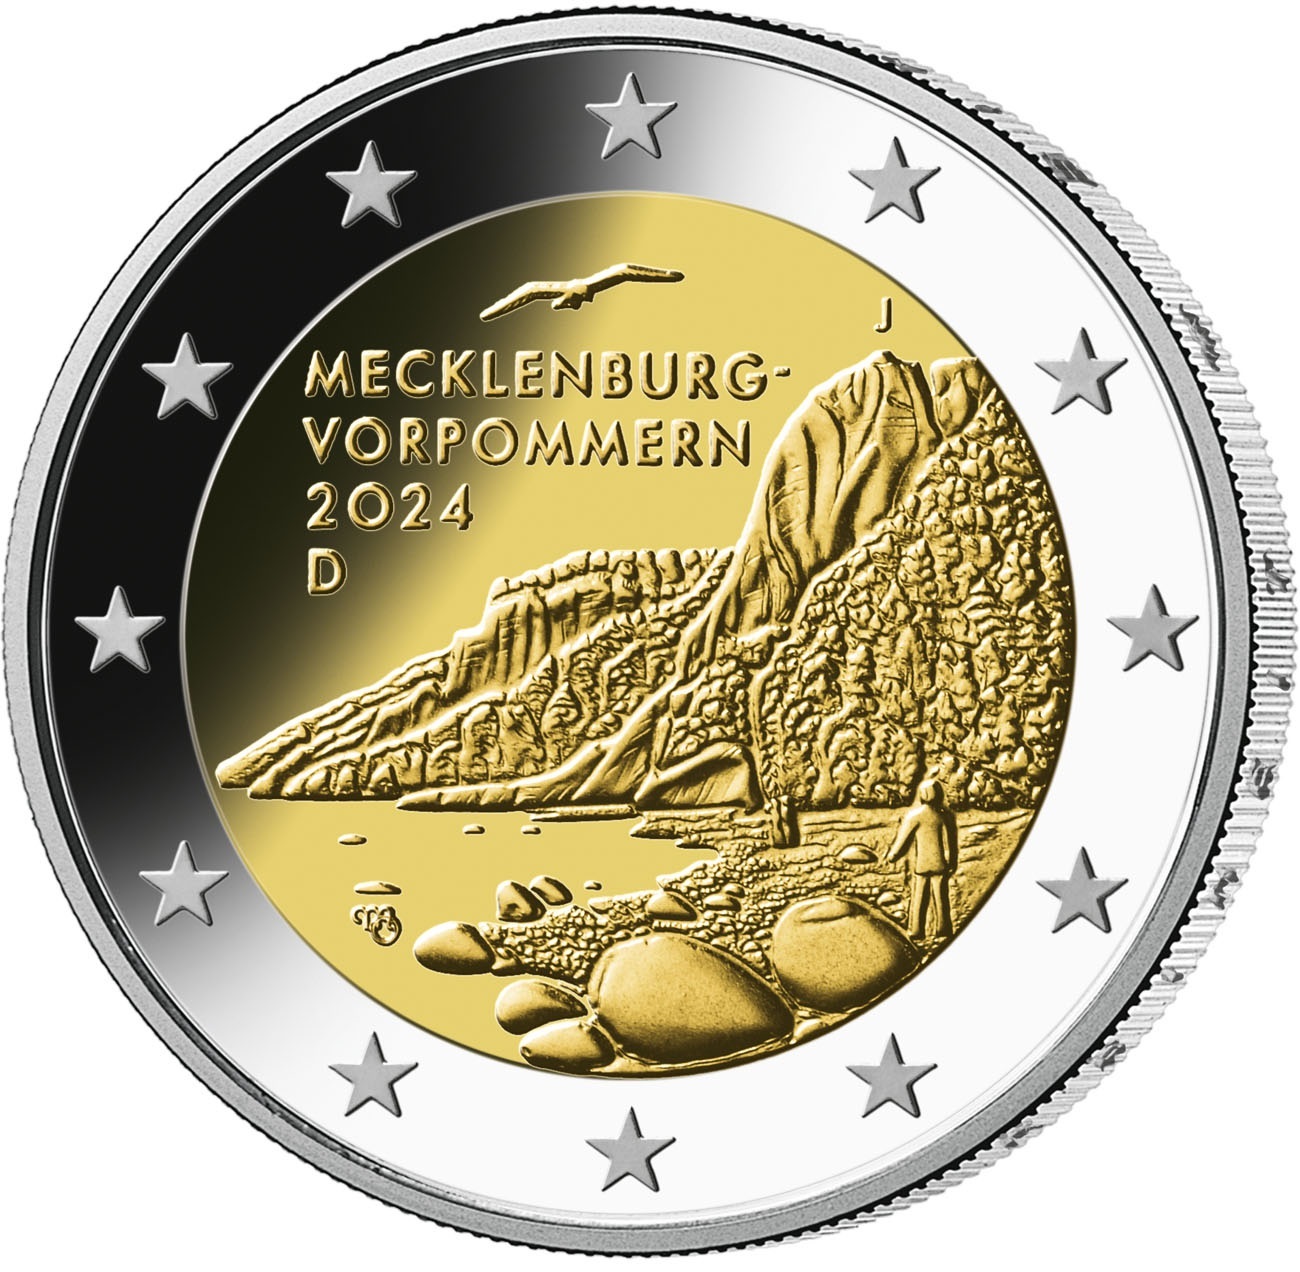 (EUR03.BU.2024.J.2.E.2) 2 euro Germany 2024 J BU - Mecklenburg-Vorpommern Obverse (zoom)